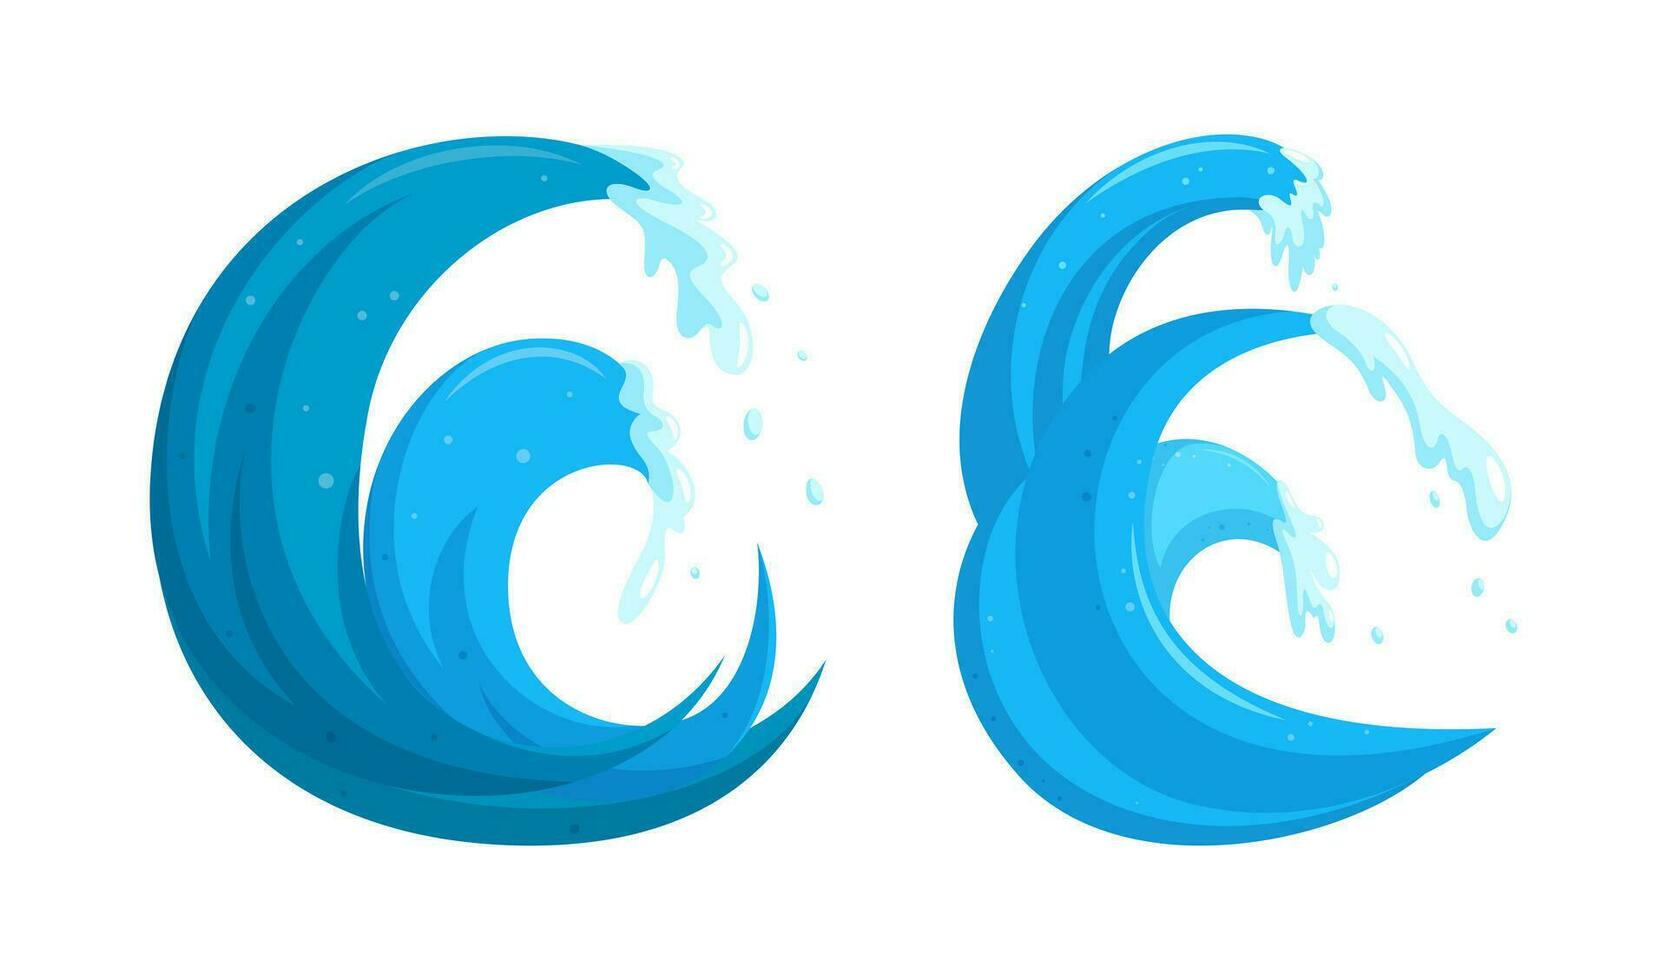 Flood waves logos. Tsinami swirling storm wave isolated in white background. Vector illustration